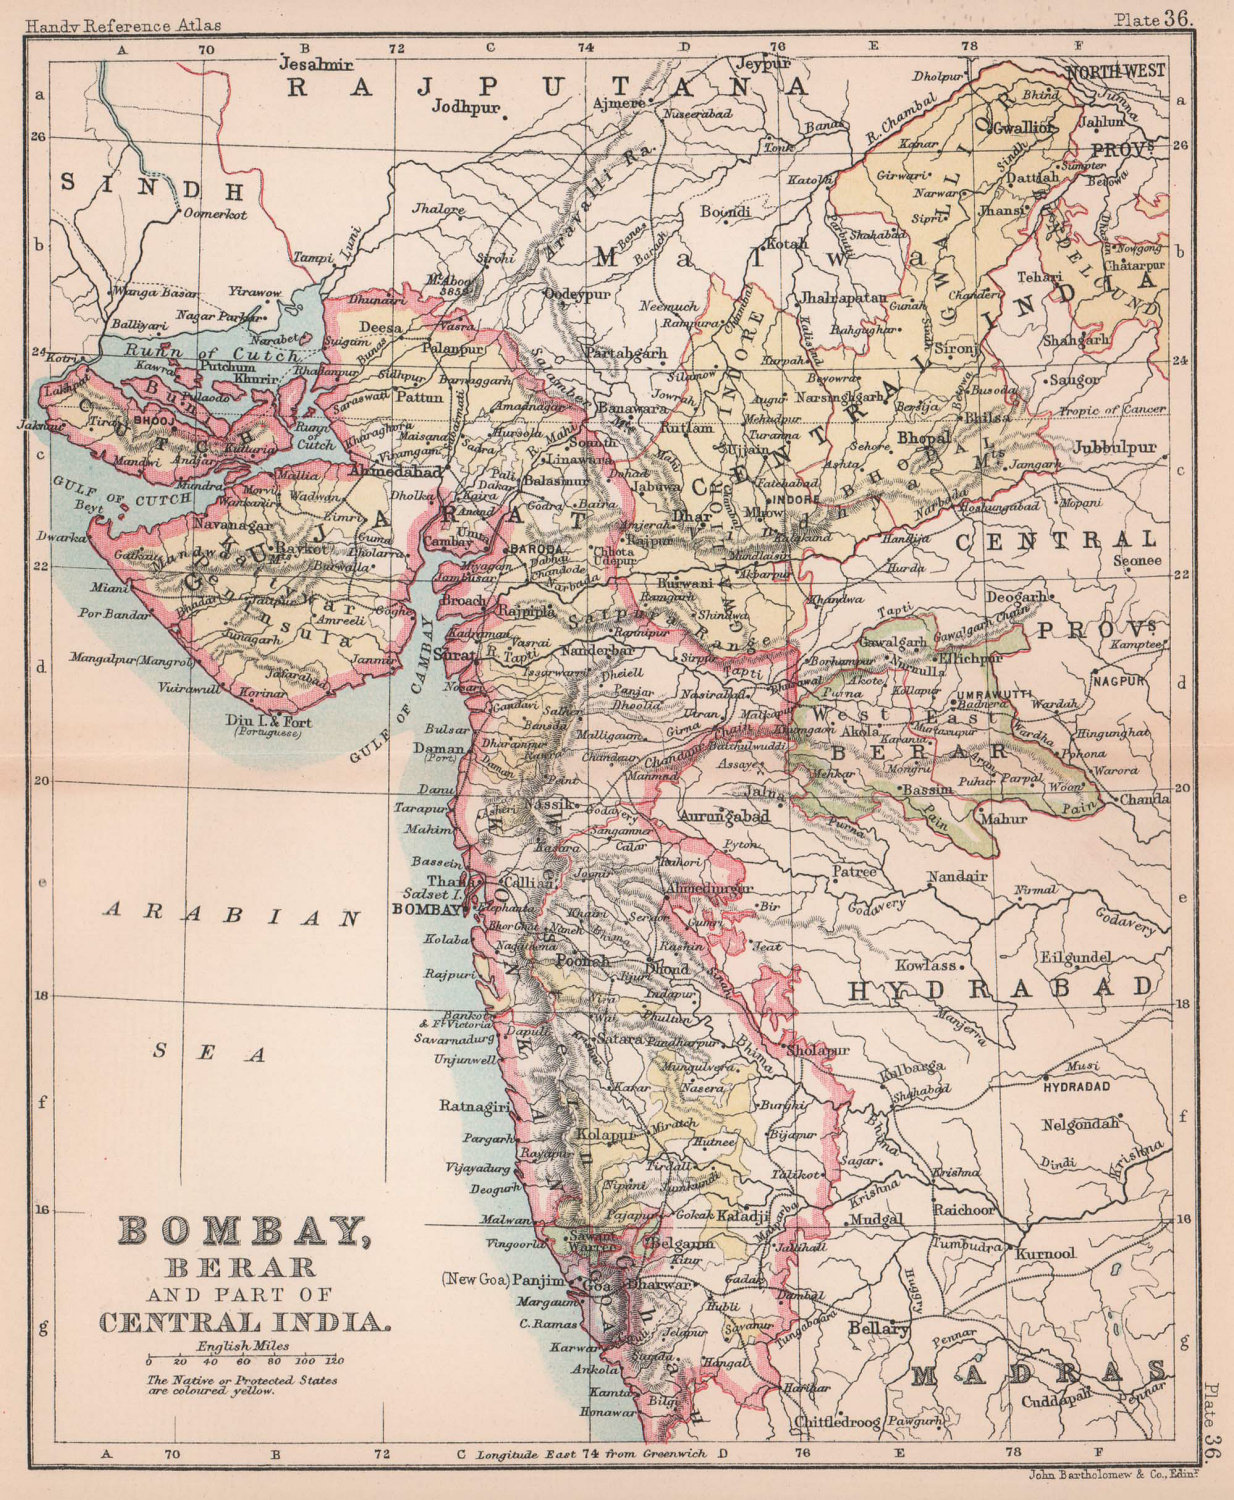 Associate Product British India West. Bombay, Berar & part of Central India. BARTHOLOMEW 1888 map